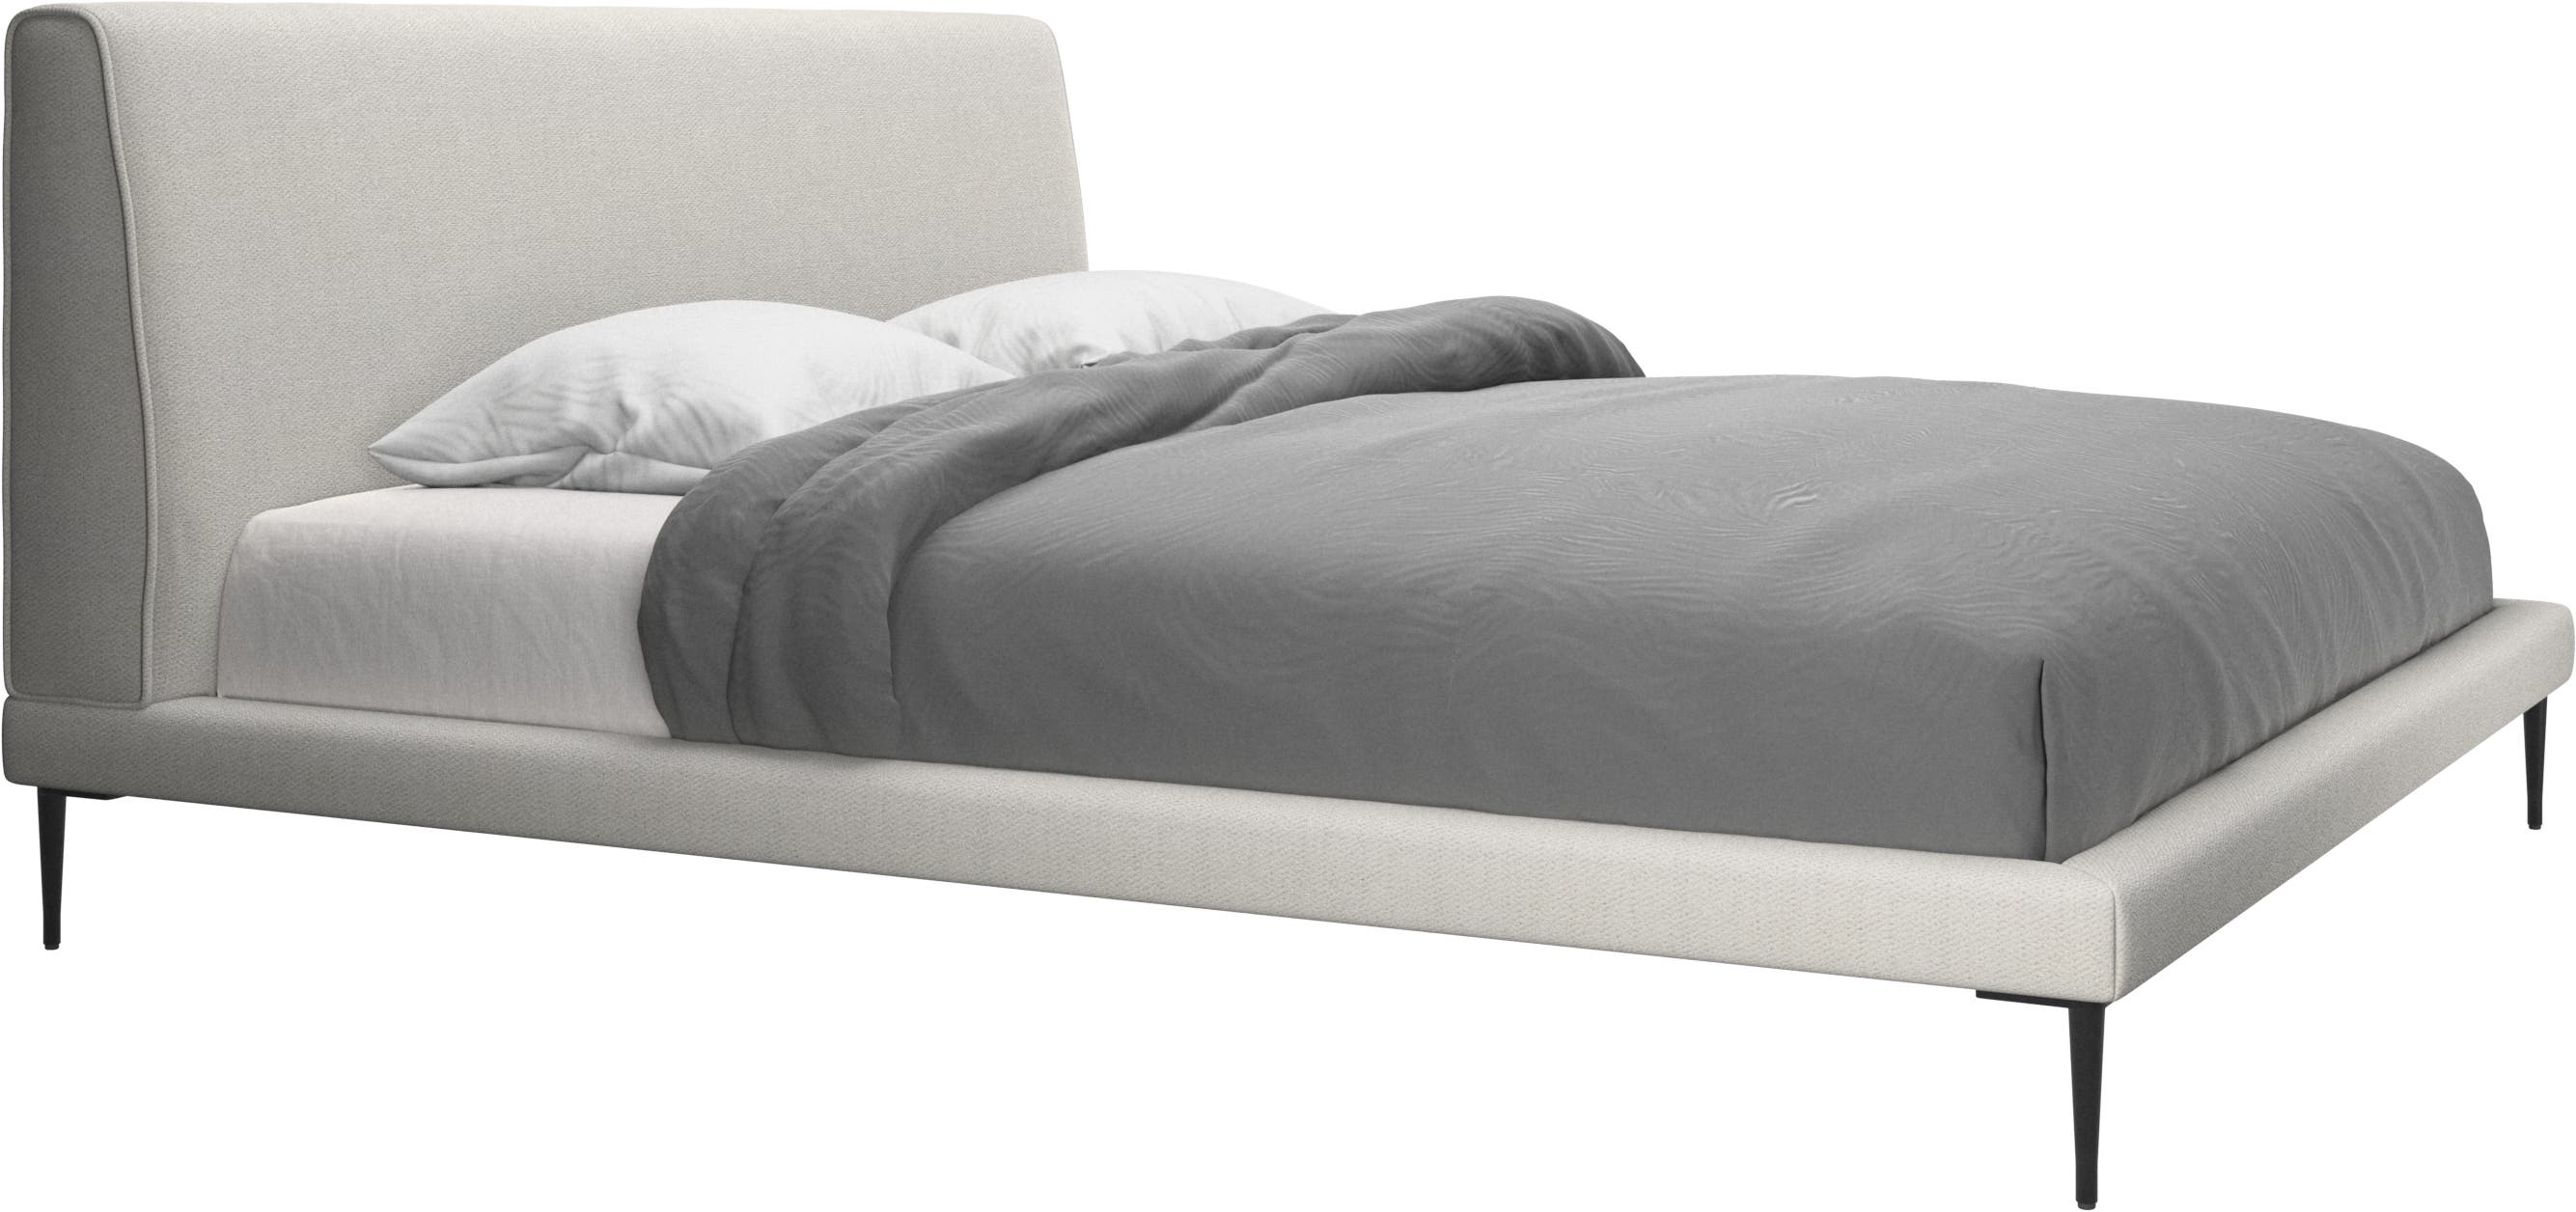 Arlington bed, excl. mattress